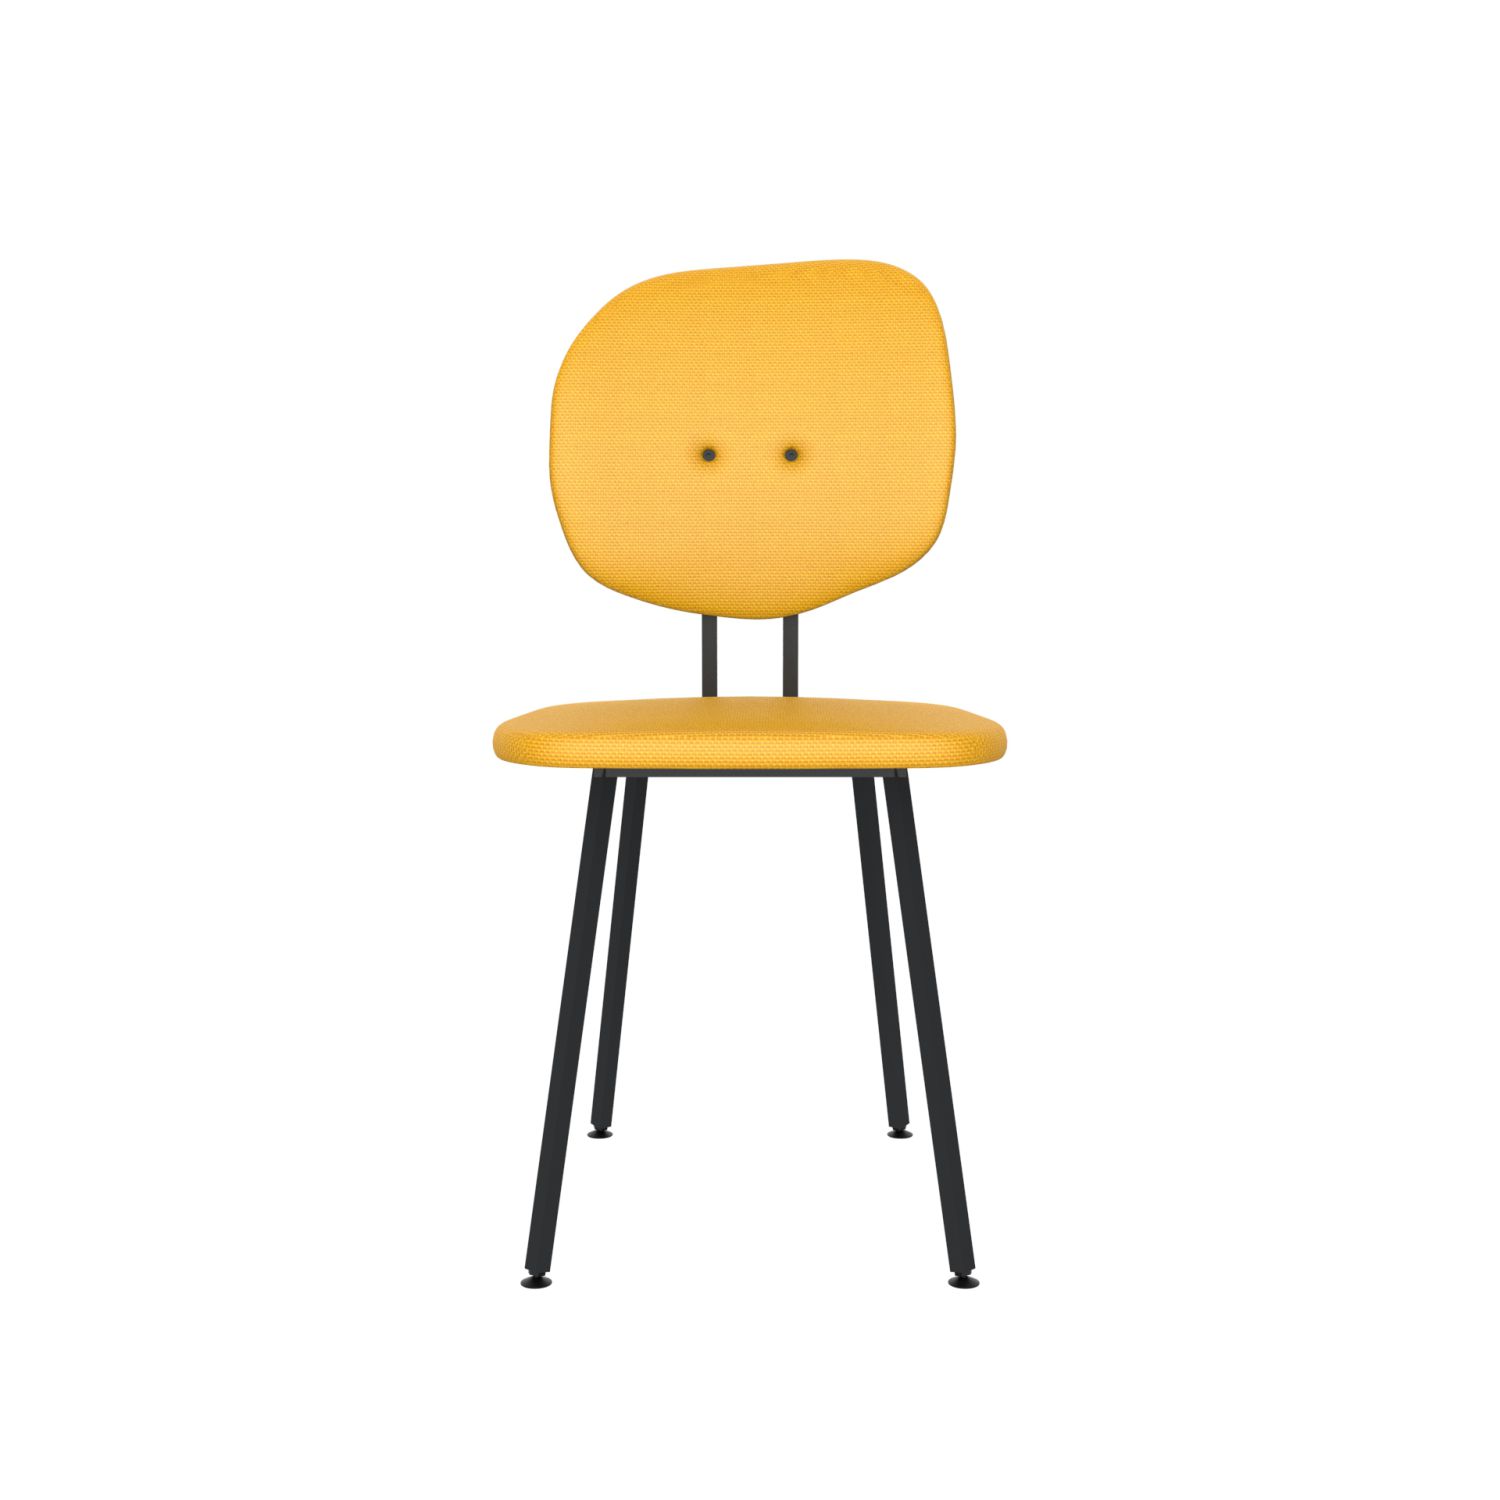 lensvelt maarten baas chair 101 not stackable without armrests backrest h lemon yellow 051 black ral9005 hard leg ends